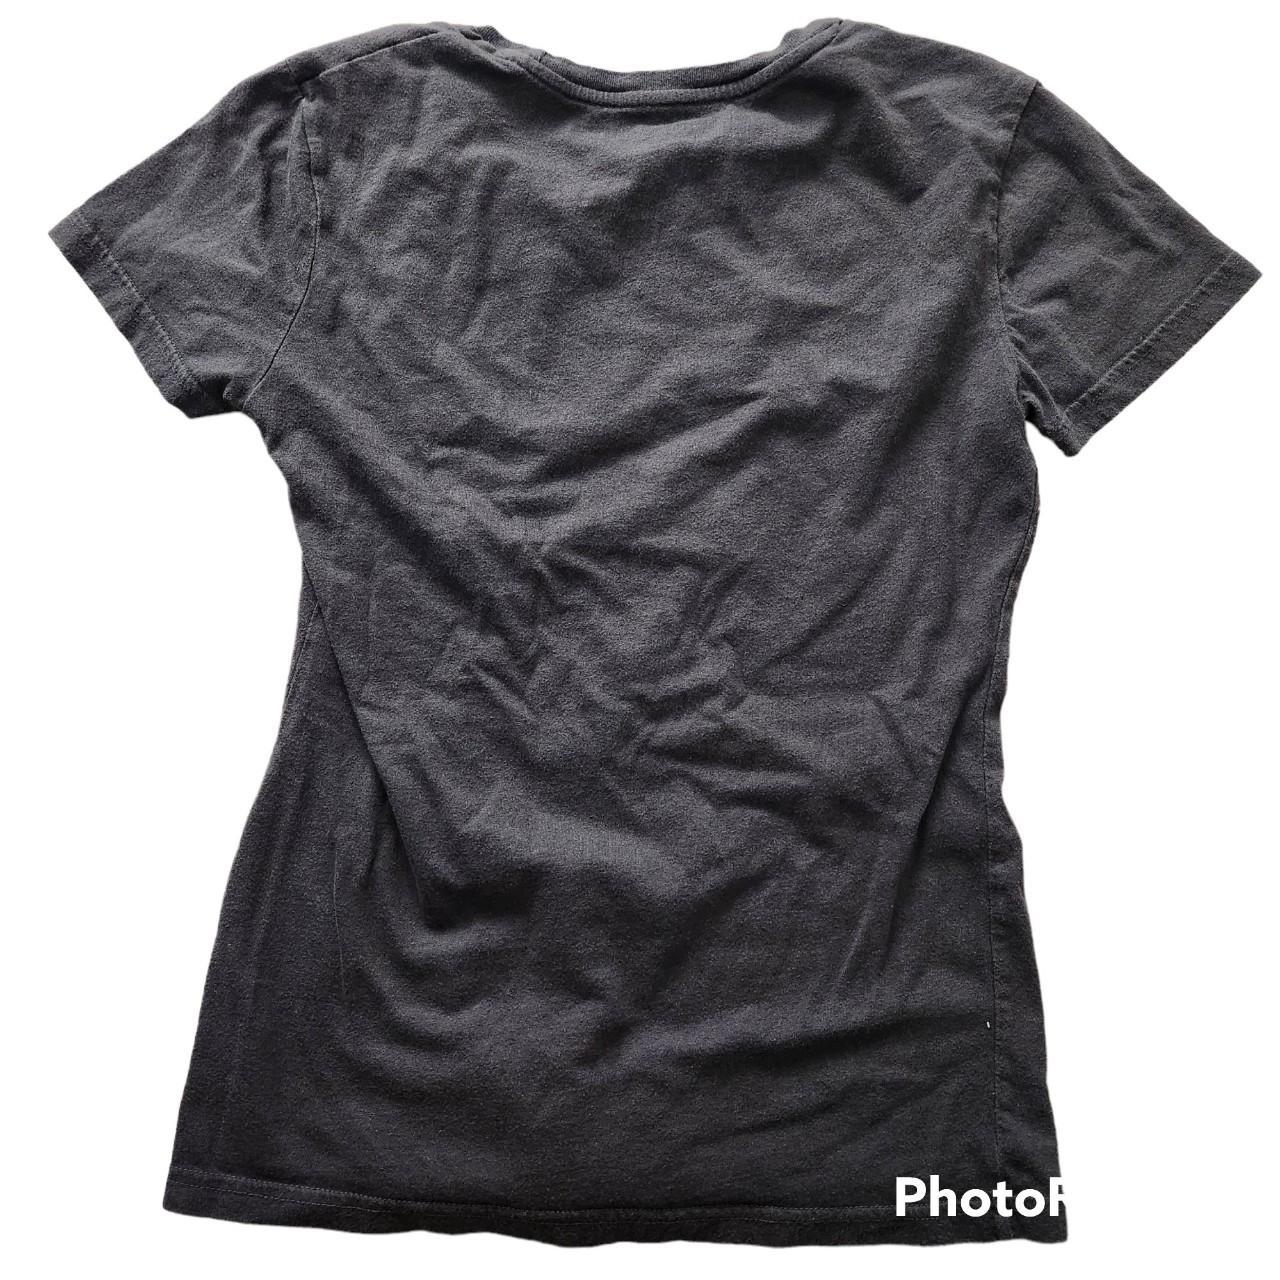 Hard Rock Cafe Women's Grey and Blue T-shirt (2)